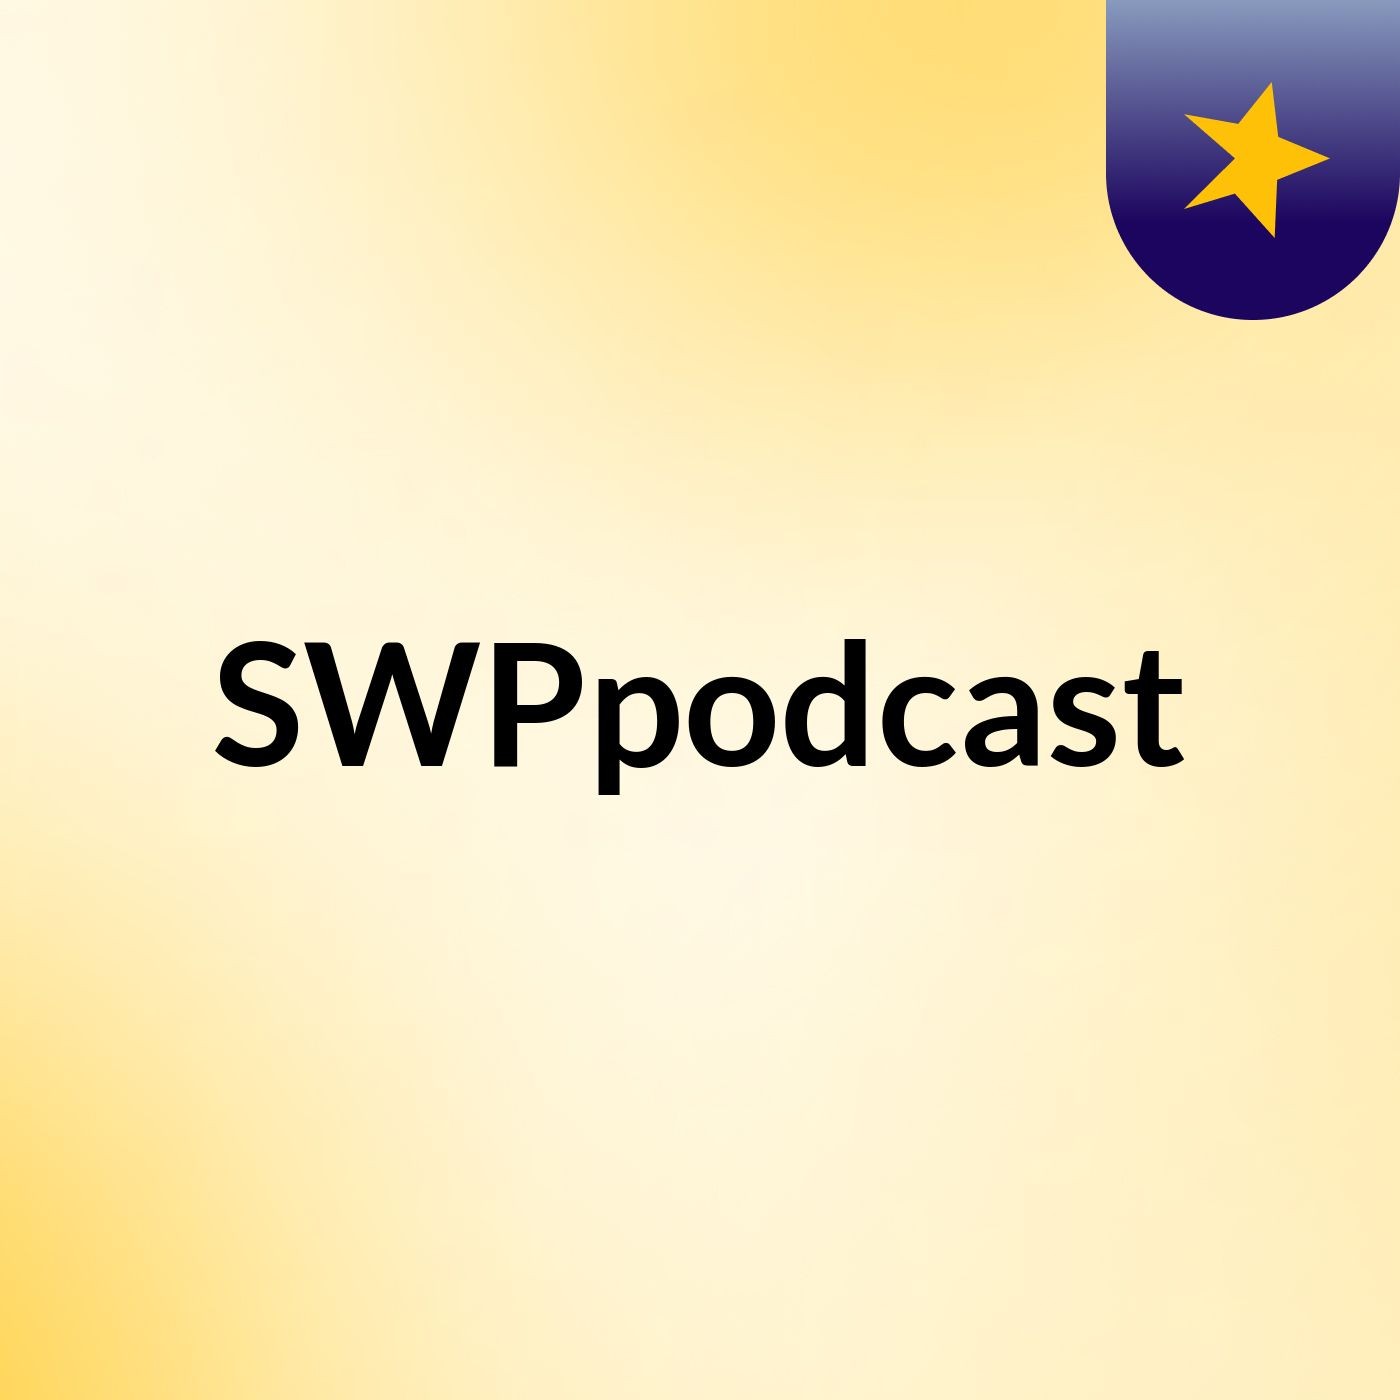 SWPpodcast